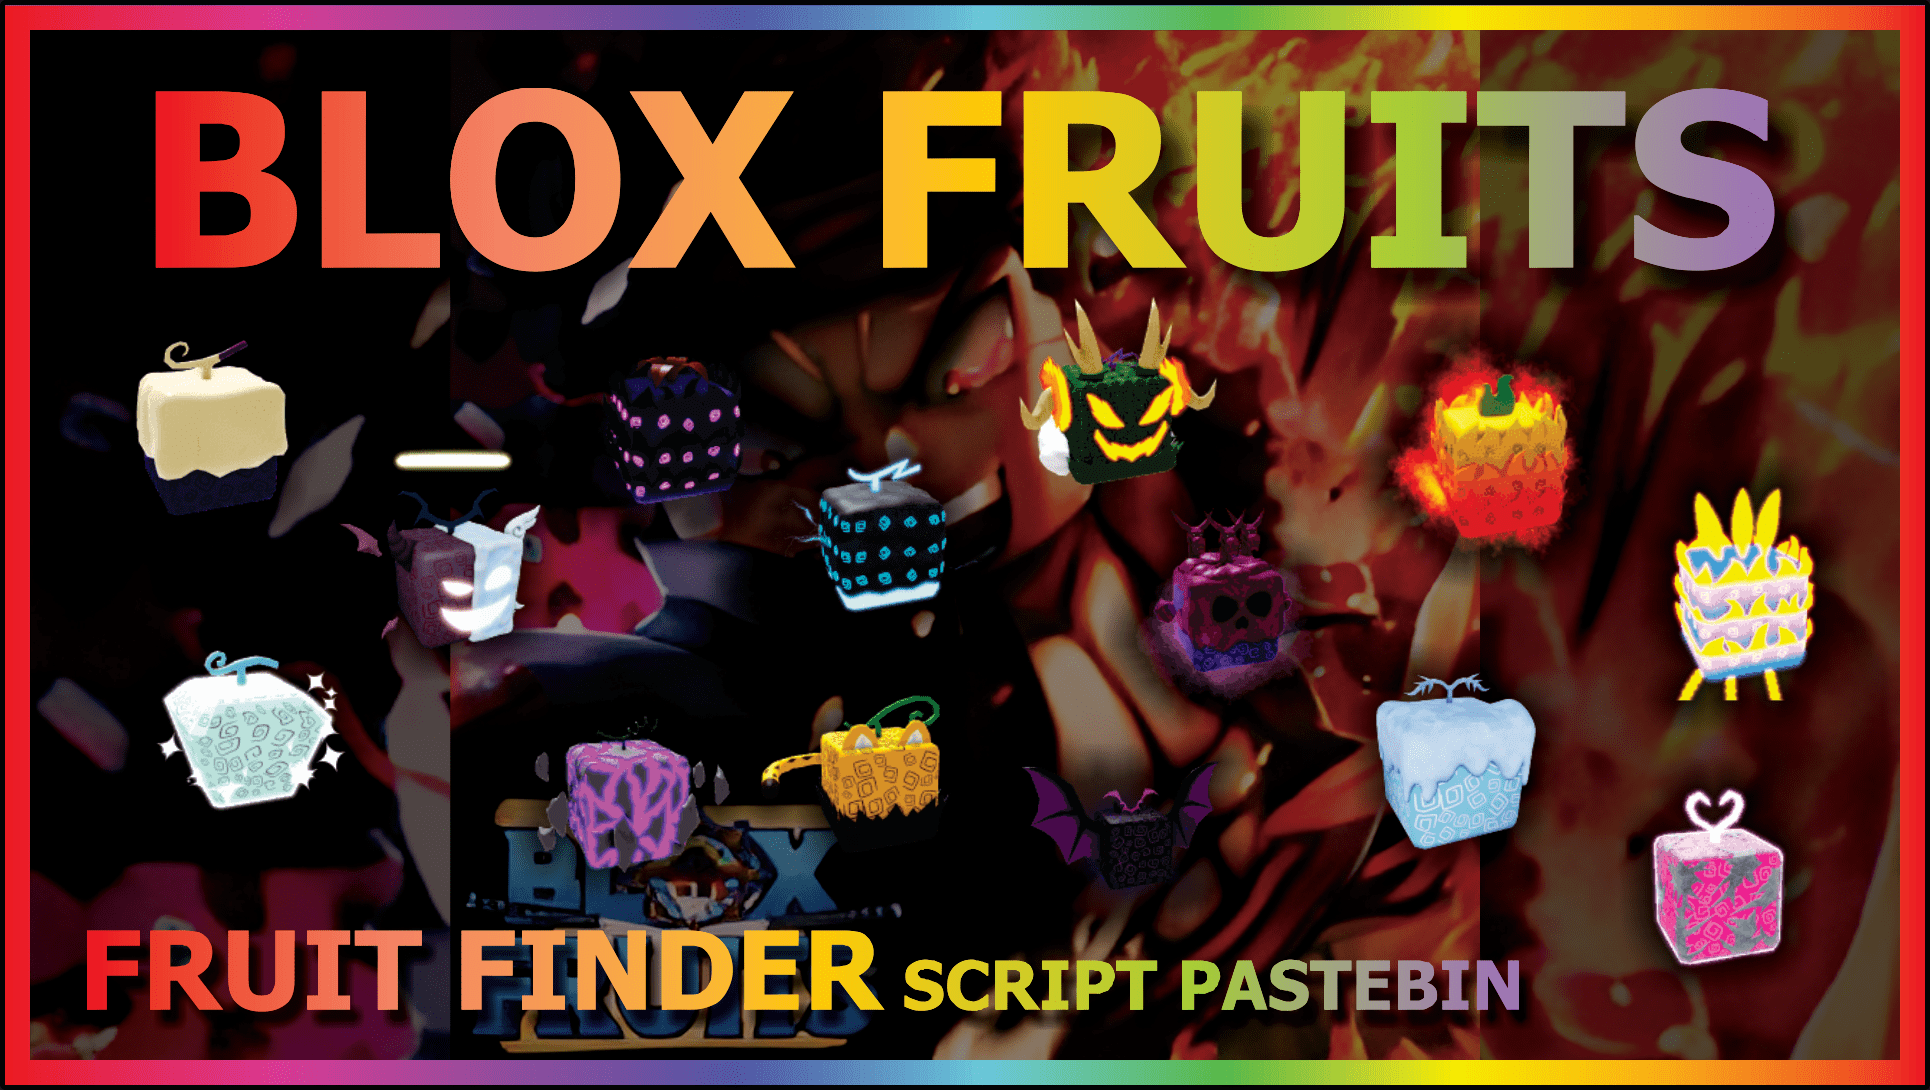 Blox Fruit Script PASTEBIN 2023 UPDATE 20, AUTO FARM, MASTERY, RAID, SEA EVENTS